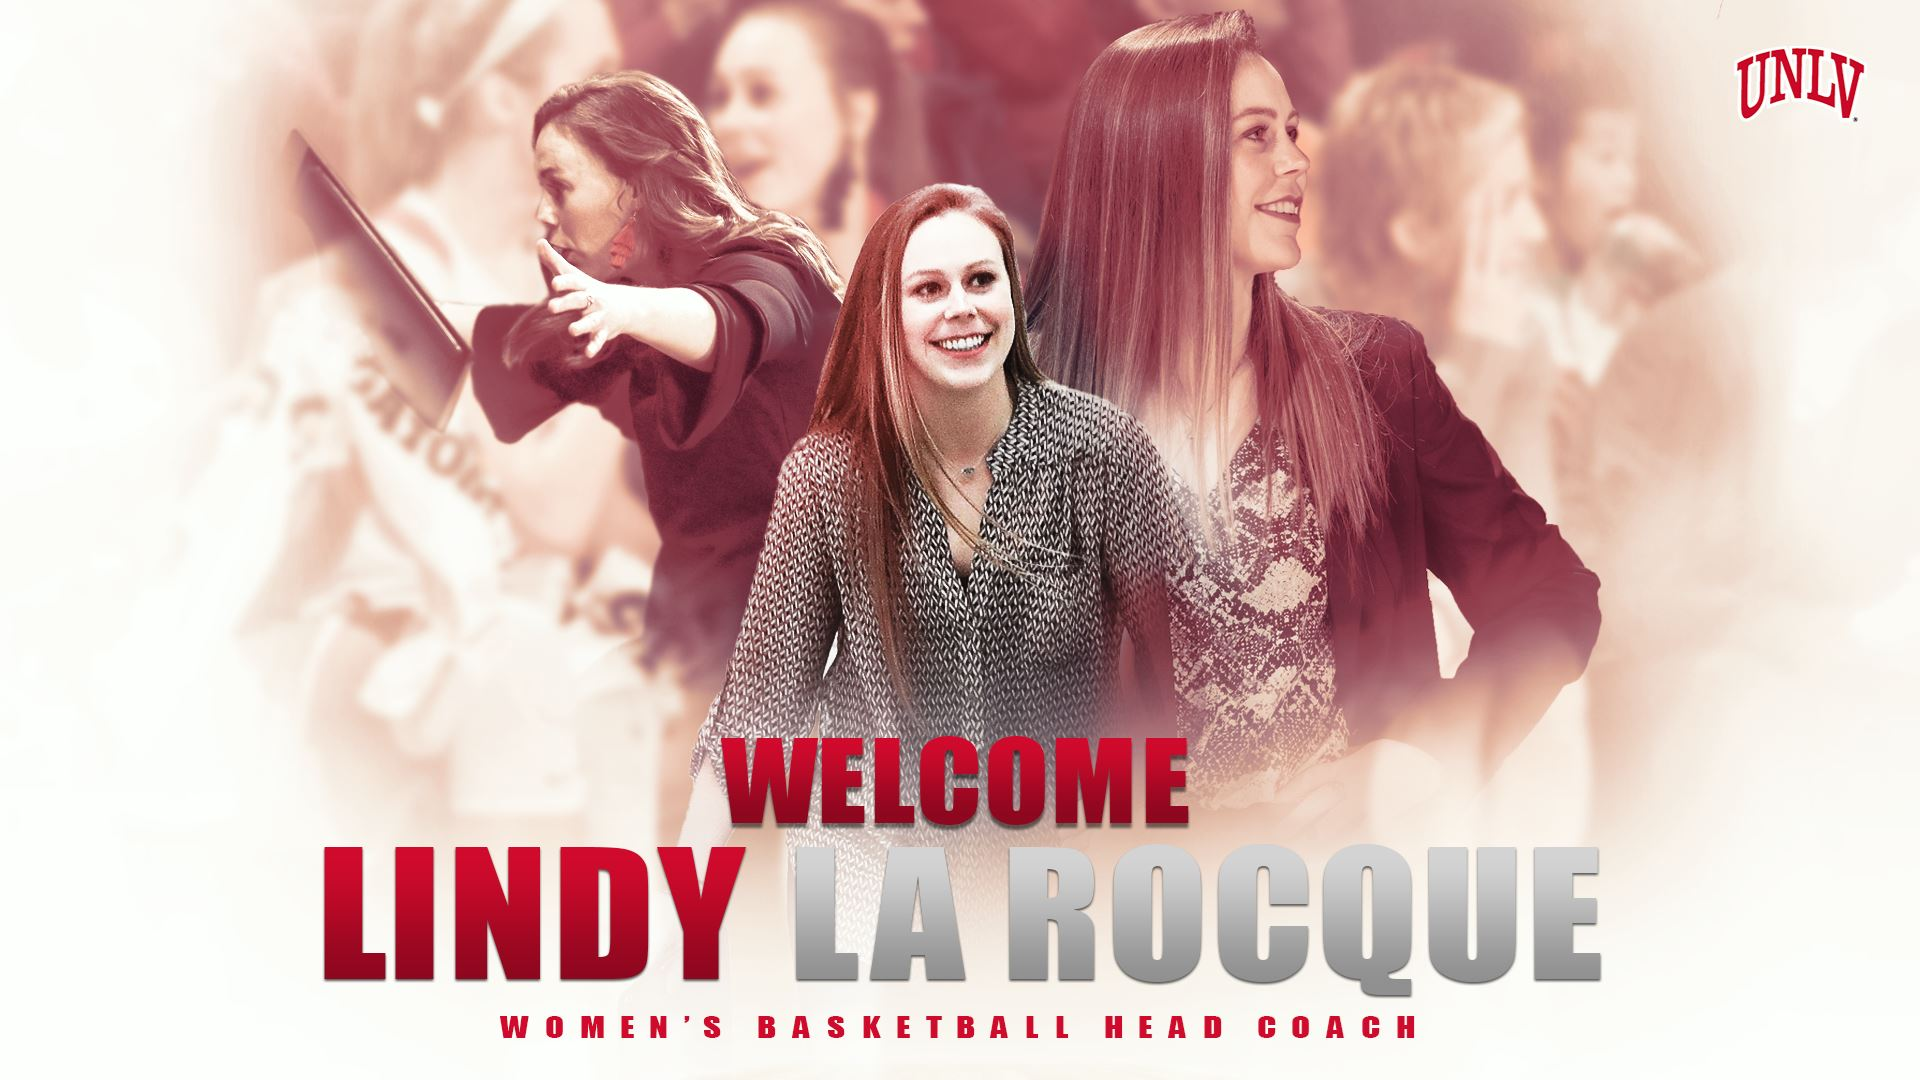 Lindy La Rocque Chosen To Lead UNLV Women's Basketball Program